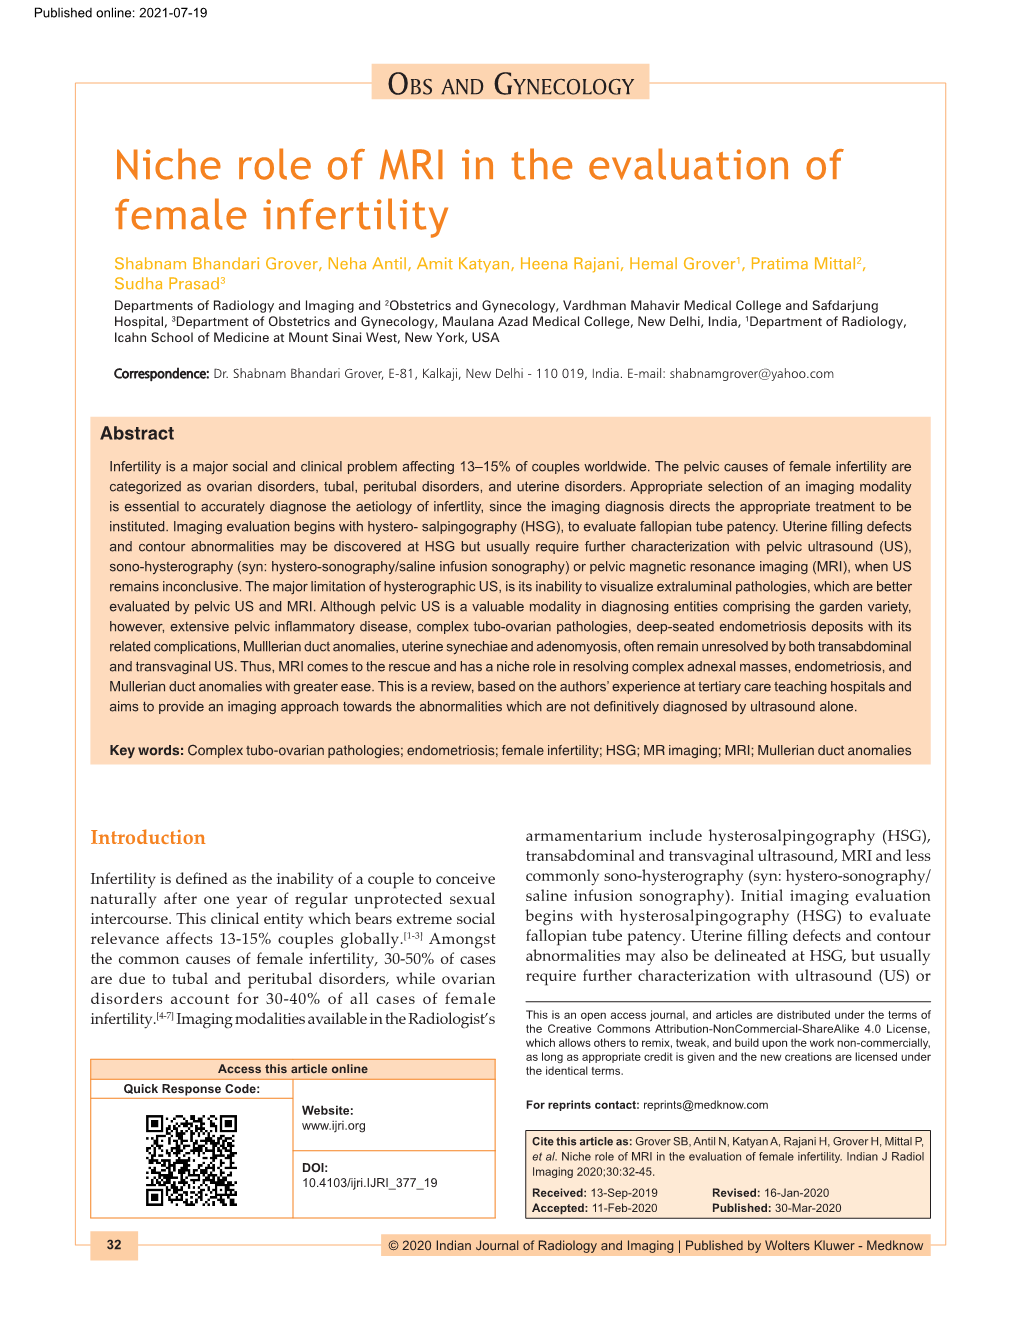 Niche Role of MRI in the Evaluation of Female Infertility